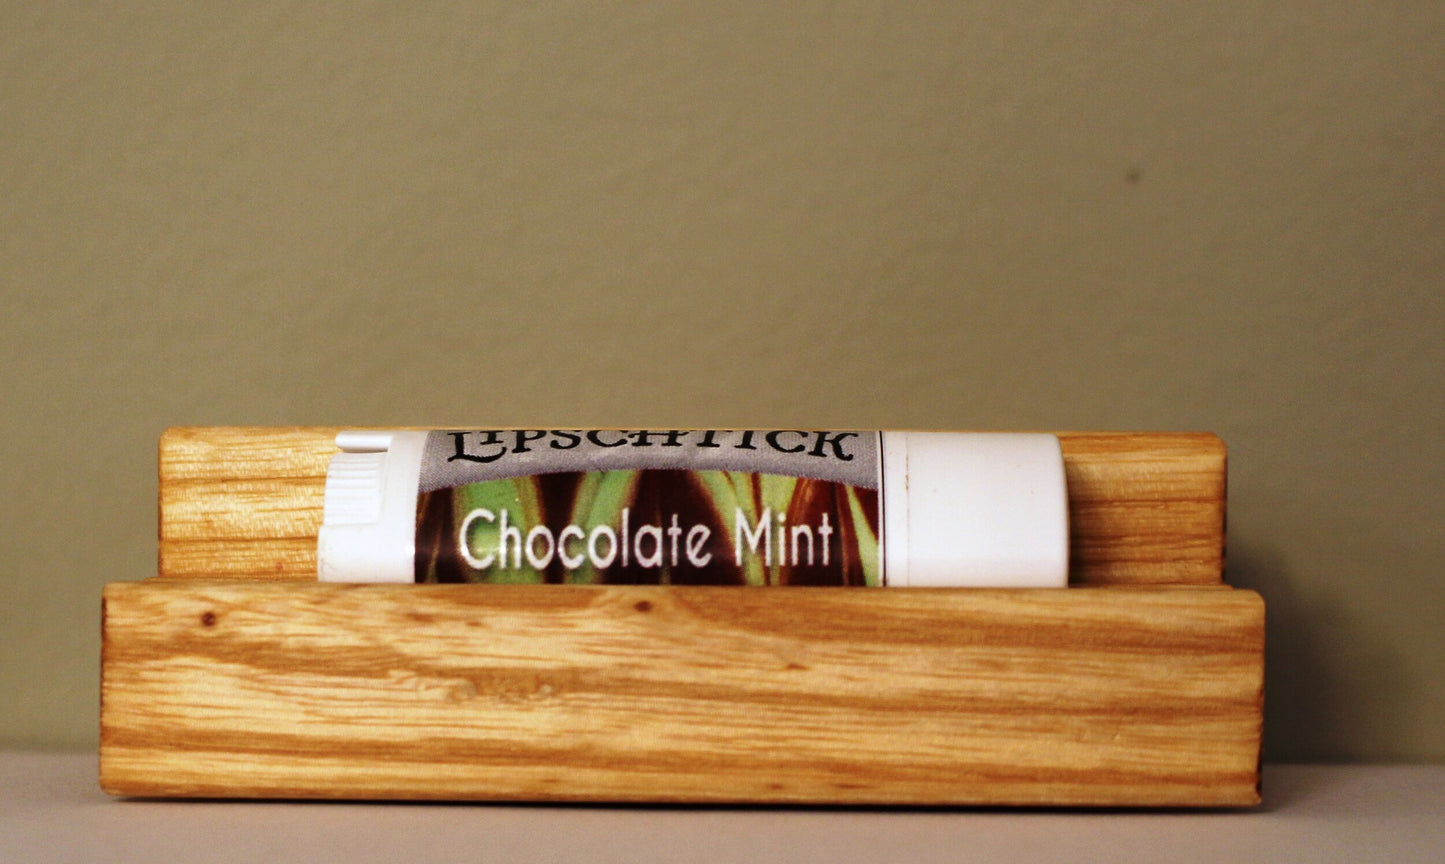 Chocolate Mint Lipschtick (Lip Balm)